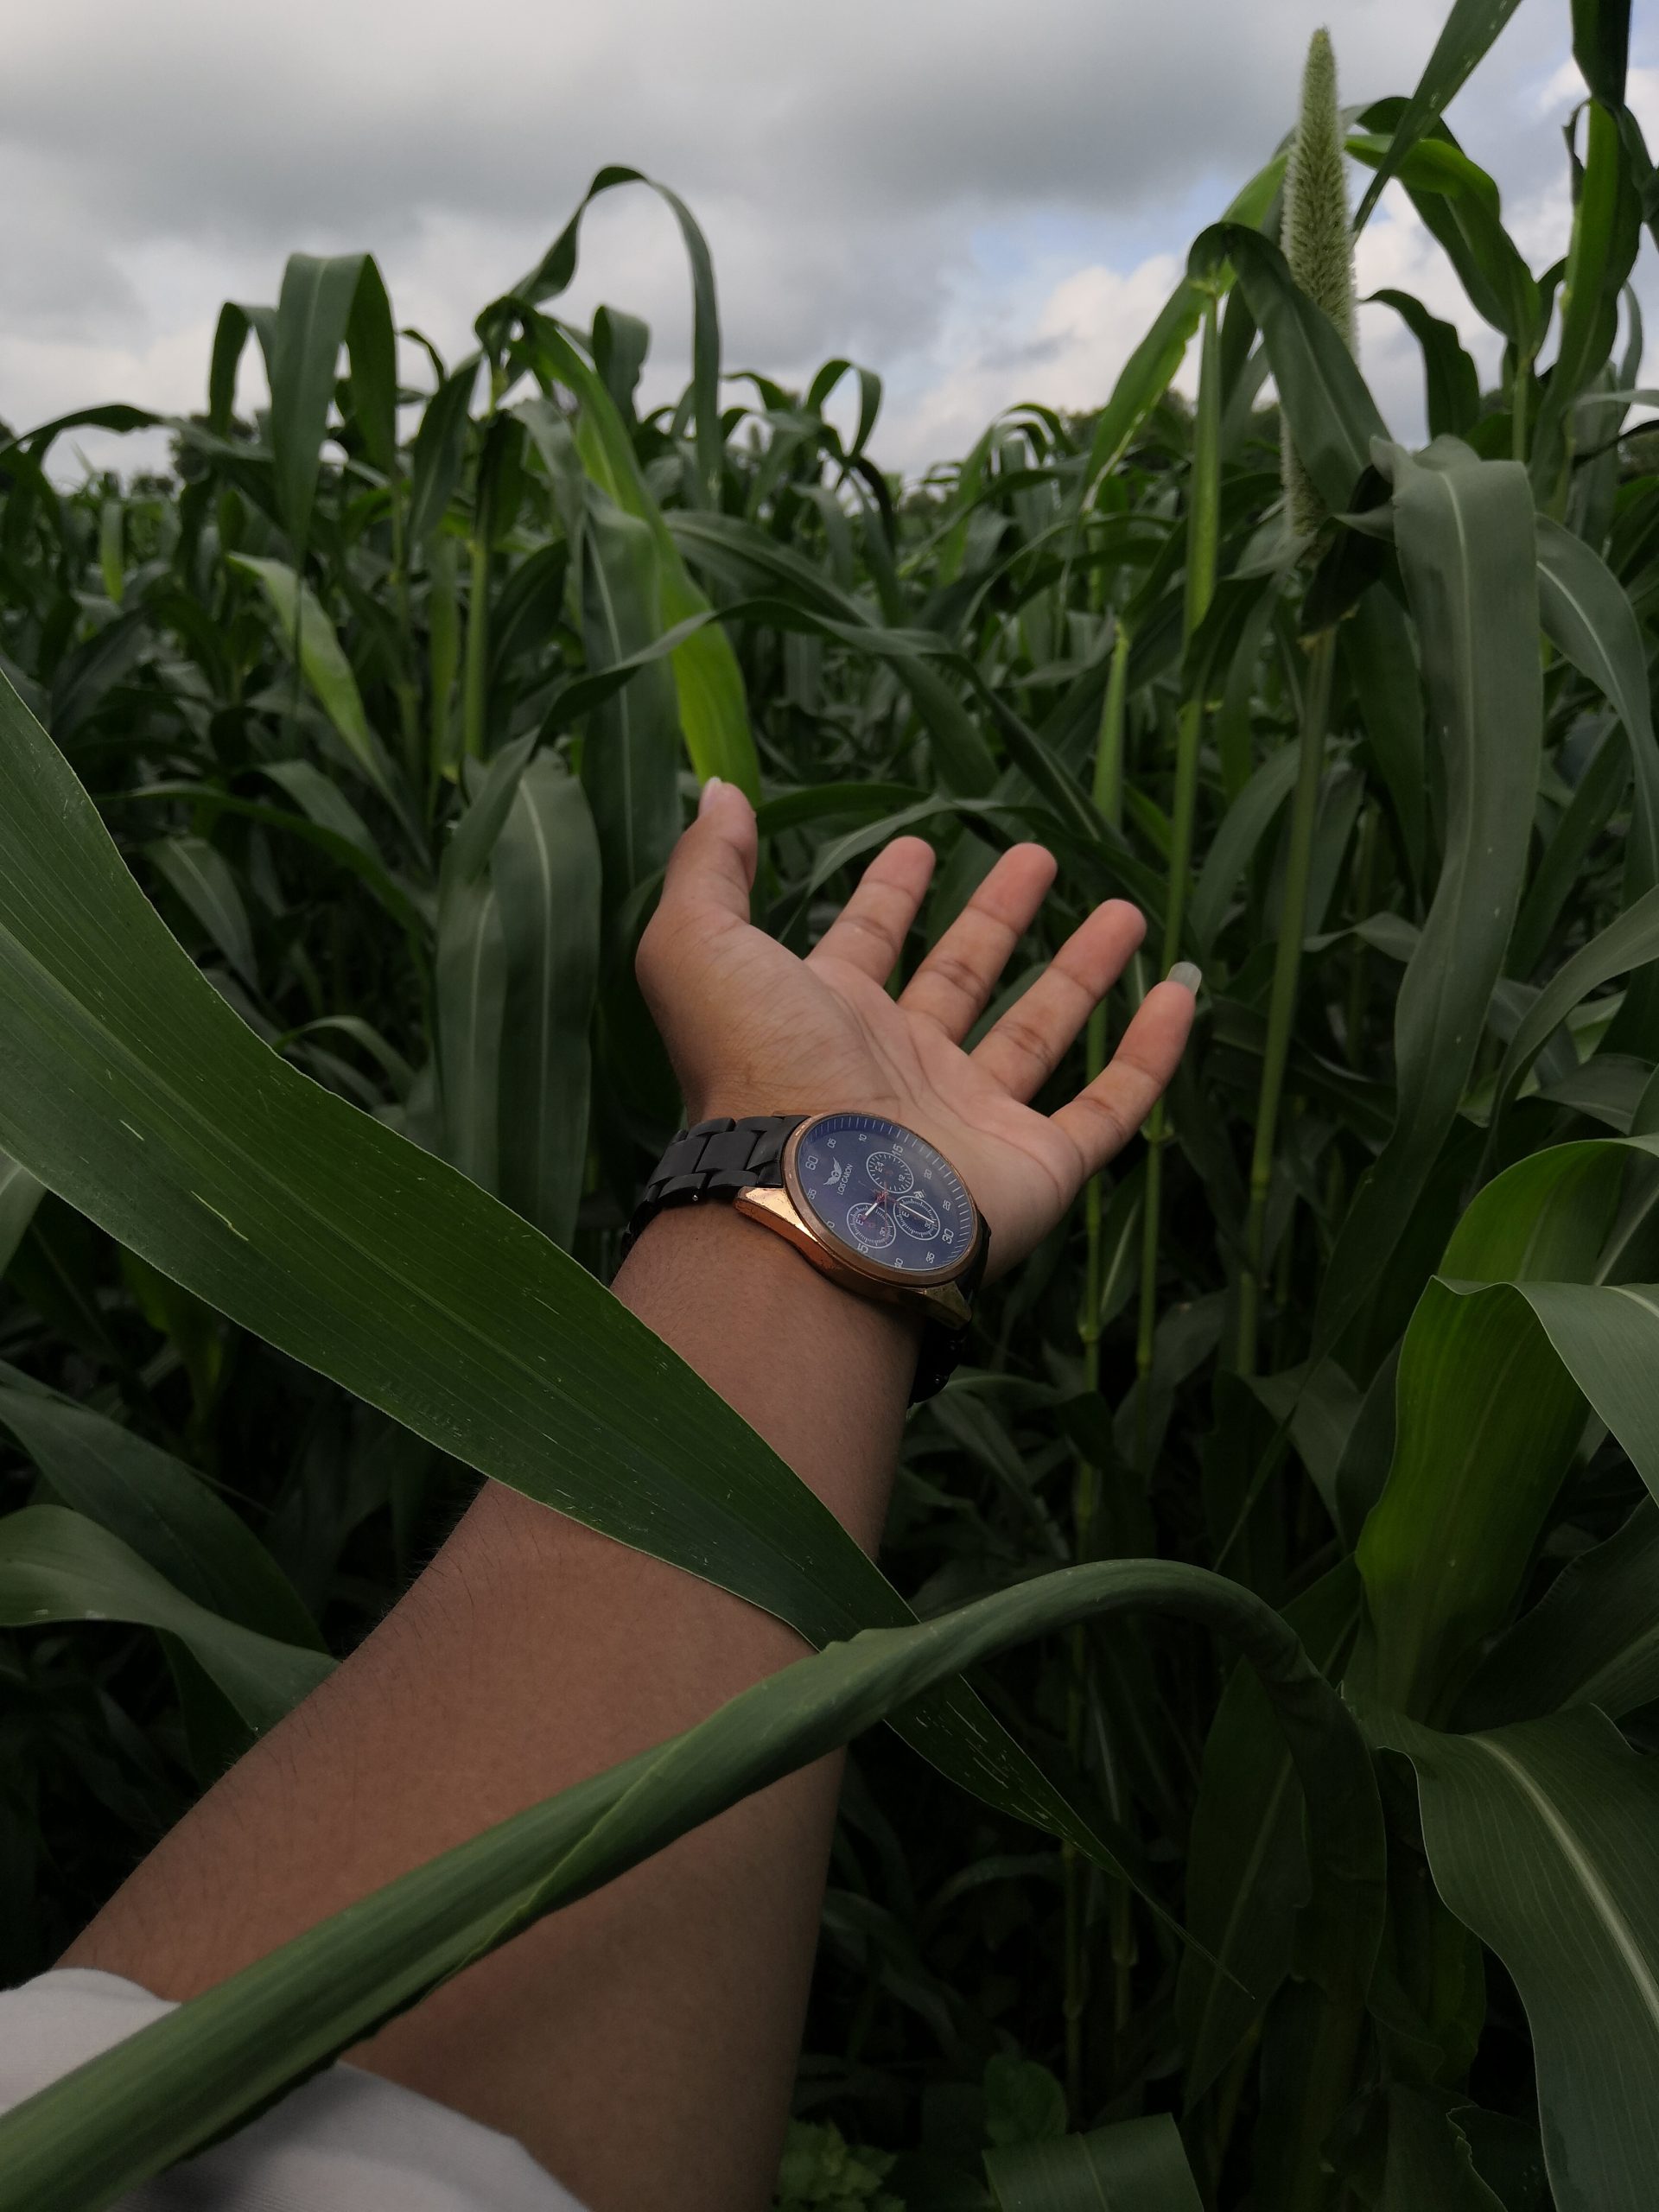 A hand towards maize plants